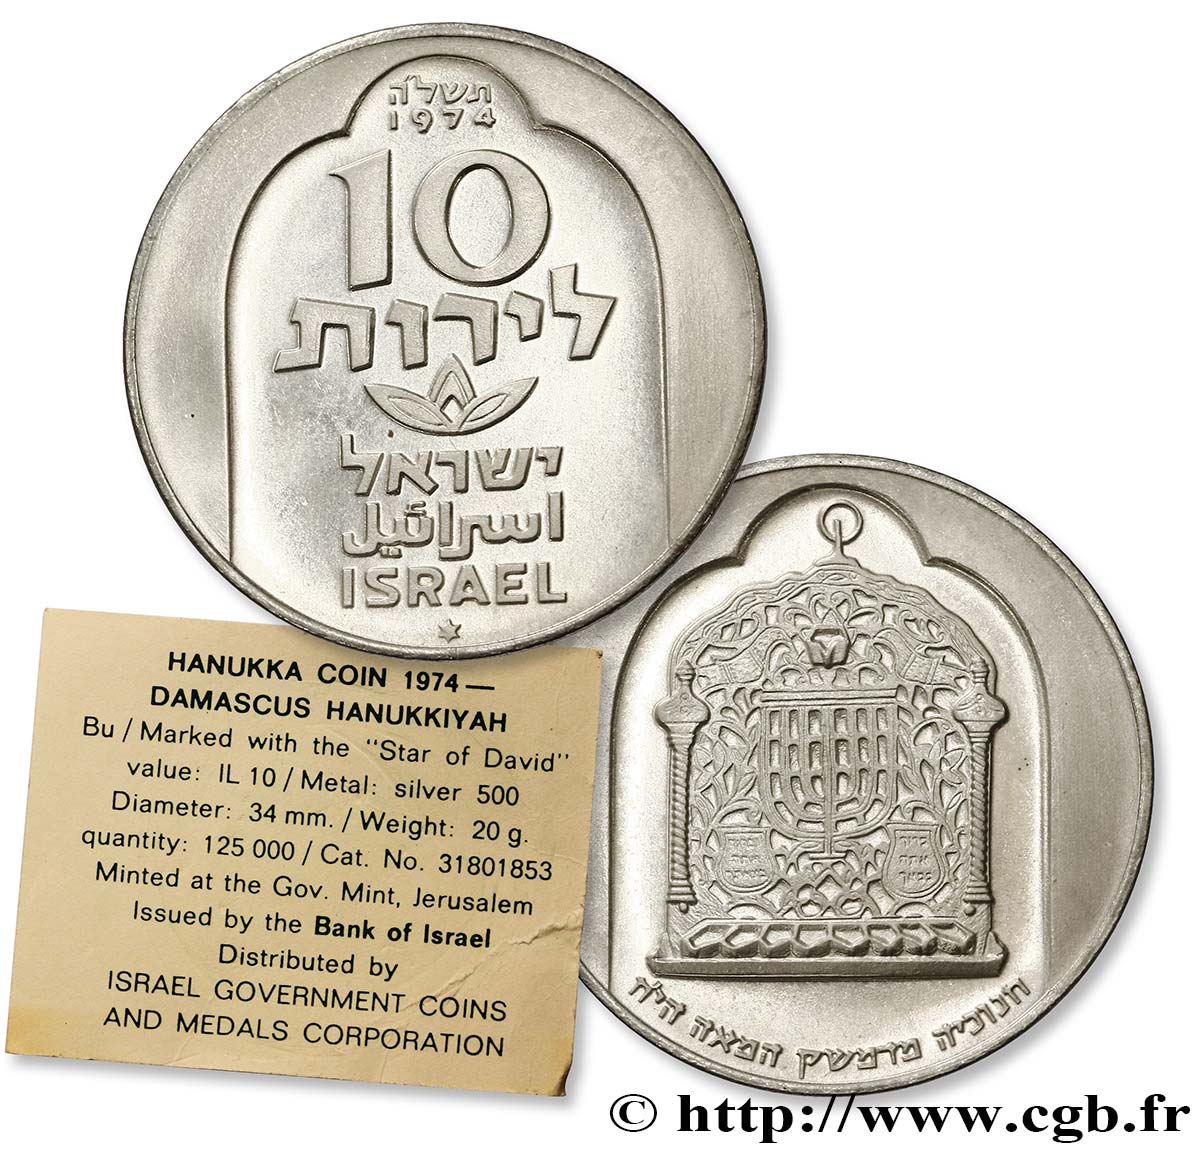 ISRAEL 10 Lirot Proof Hanukka Lampe de Damas variété avec étoile de David 1974  MS 